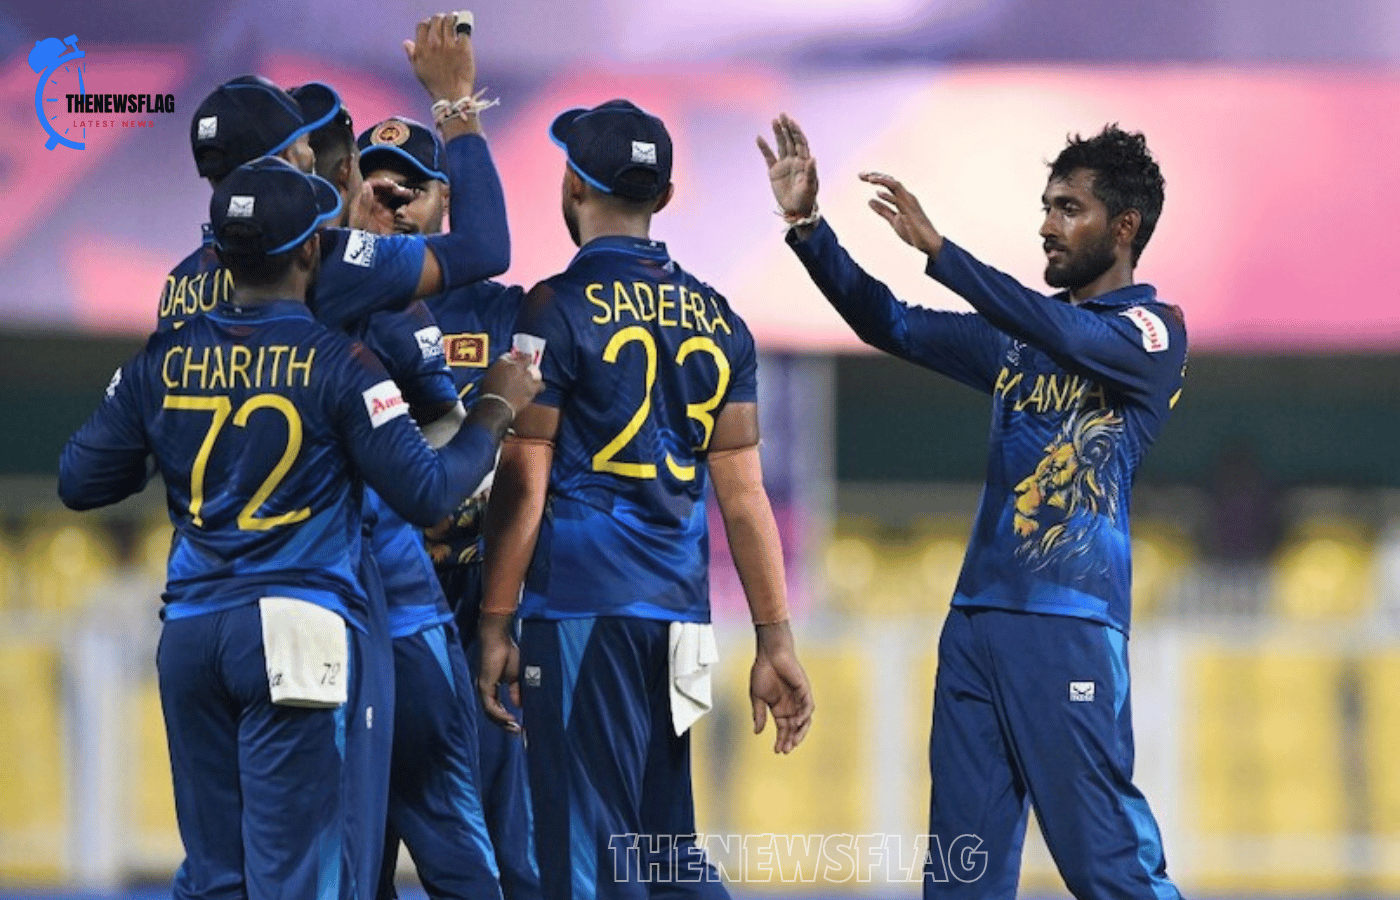 Bangladesh vs. Sri Lanka Live Cricket Score: Latest Updates for the Second ODI